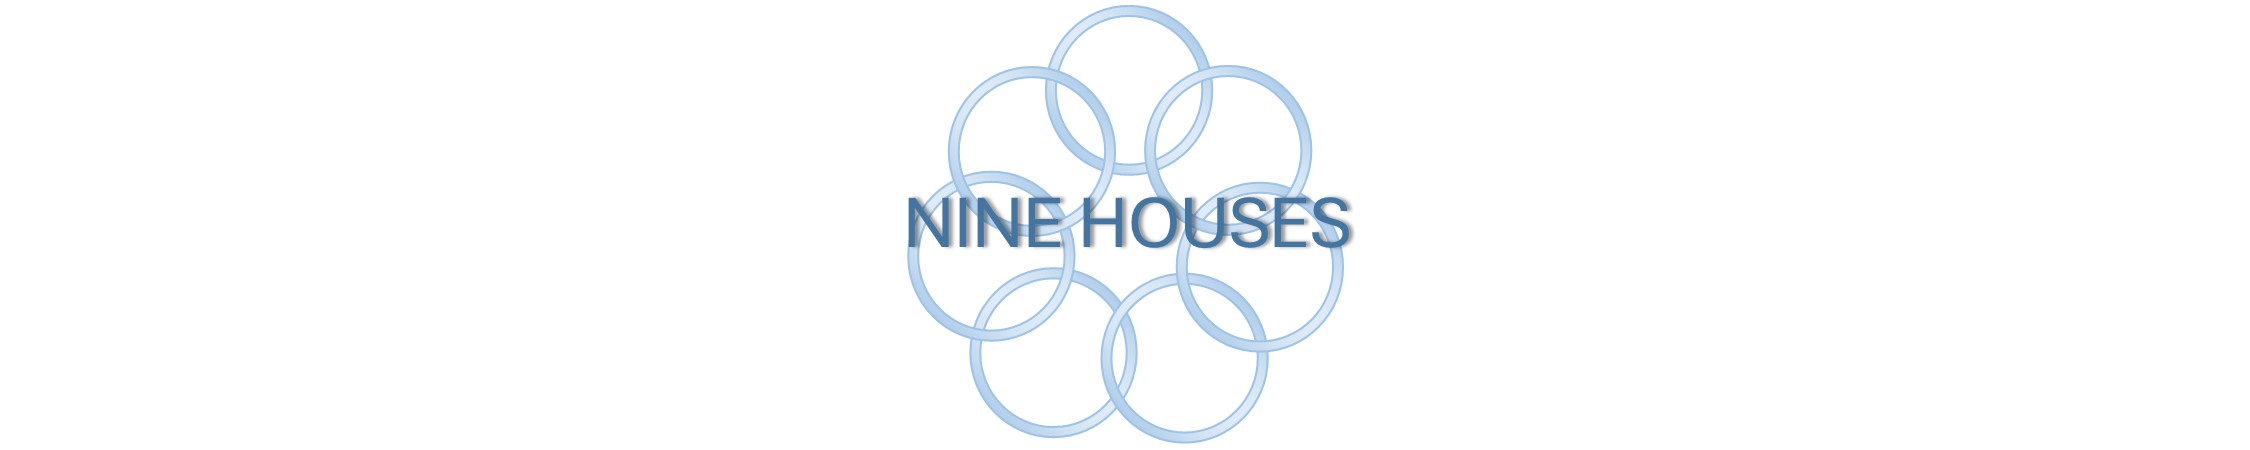 Nine Houses